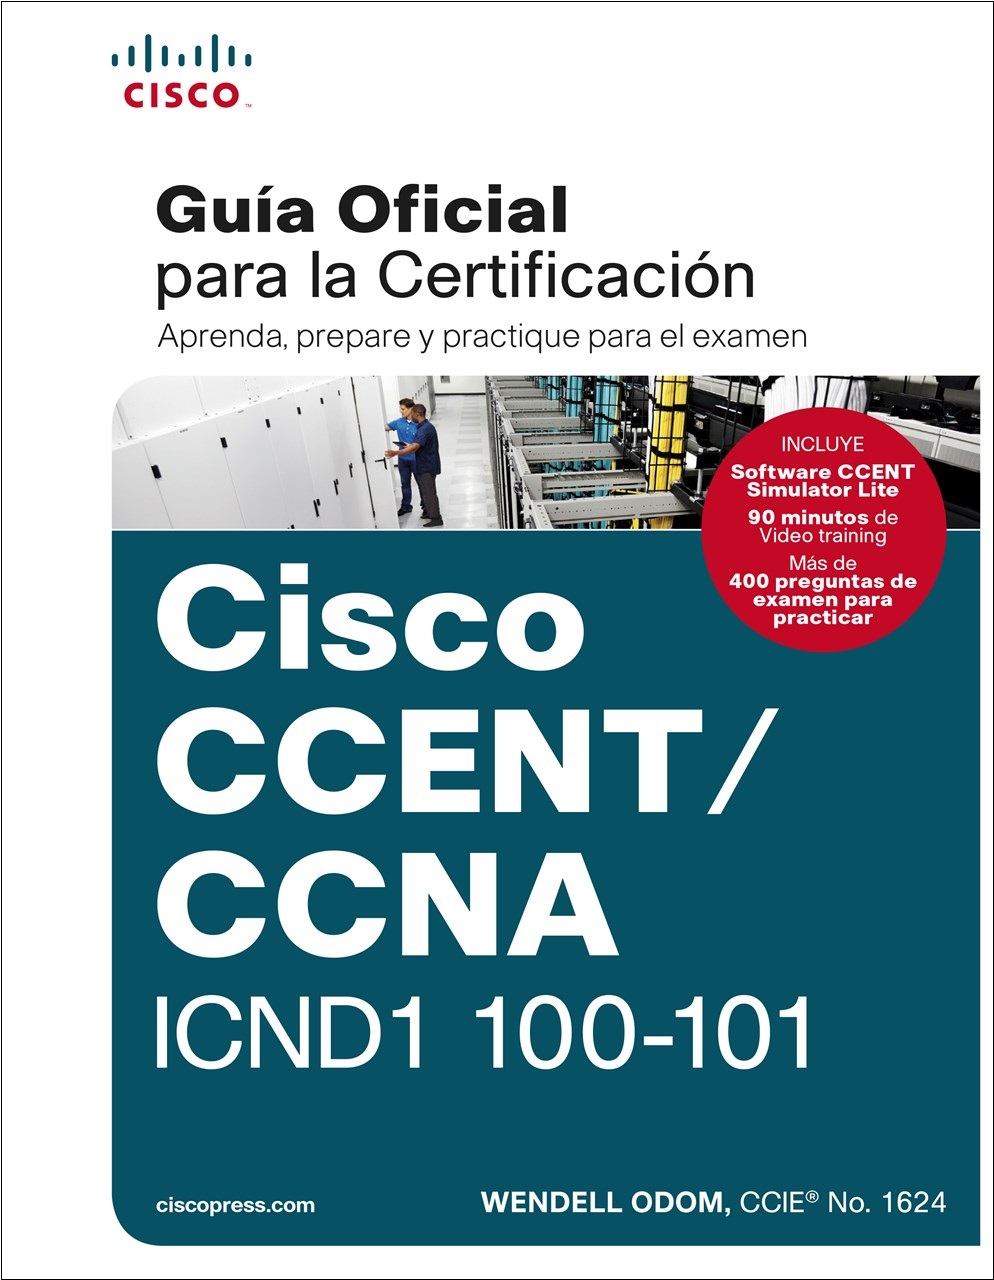 0000168 guia oficial para la certificacion ccentccna icnd1 100 101